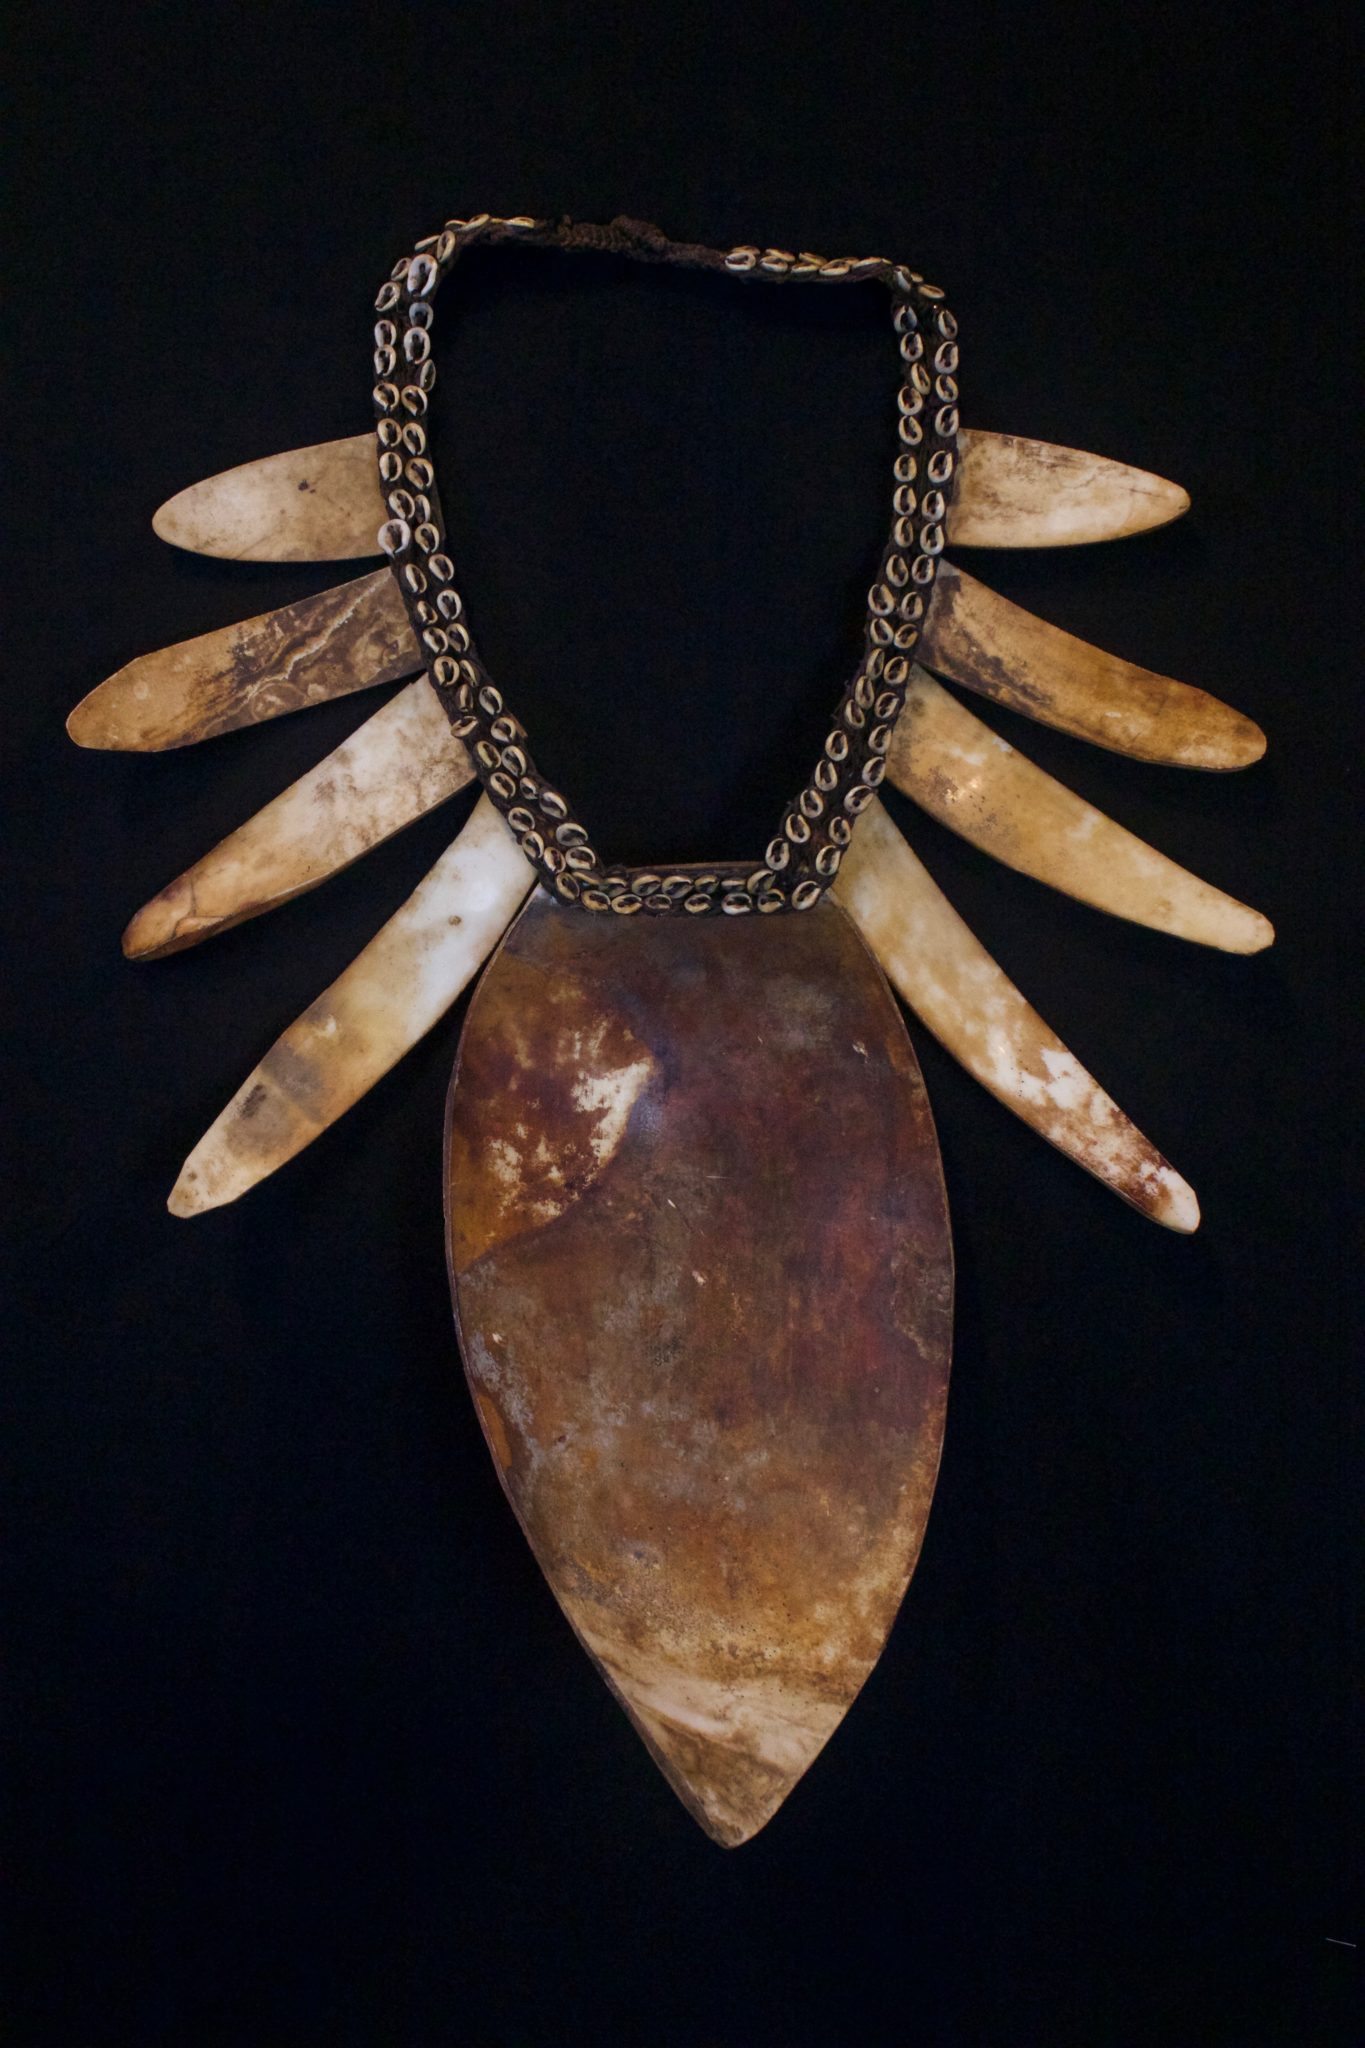 Shaman Shell Necklace, Papua New Guinea (Irian Jaya), Indonesia, Mid 20th c. Shell, cloth, fiber cord. Worn by the shaman for healing ceremonies. 19” x 15” x 3 ½” $850.